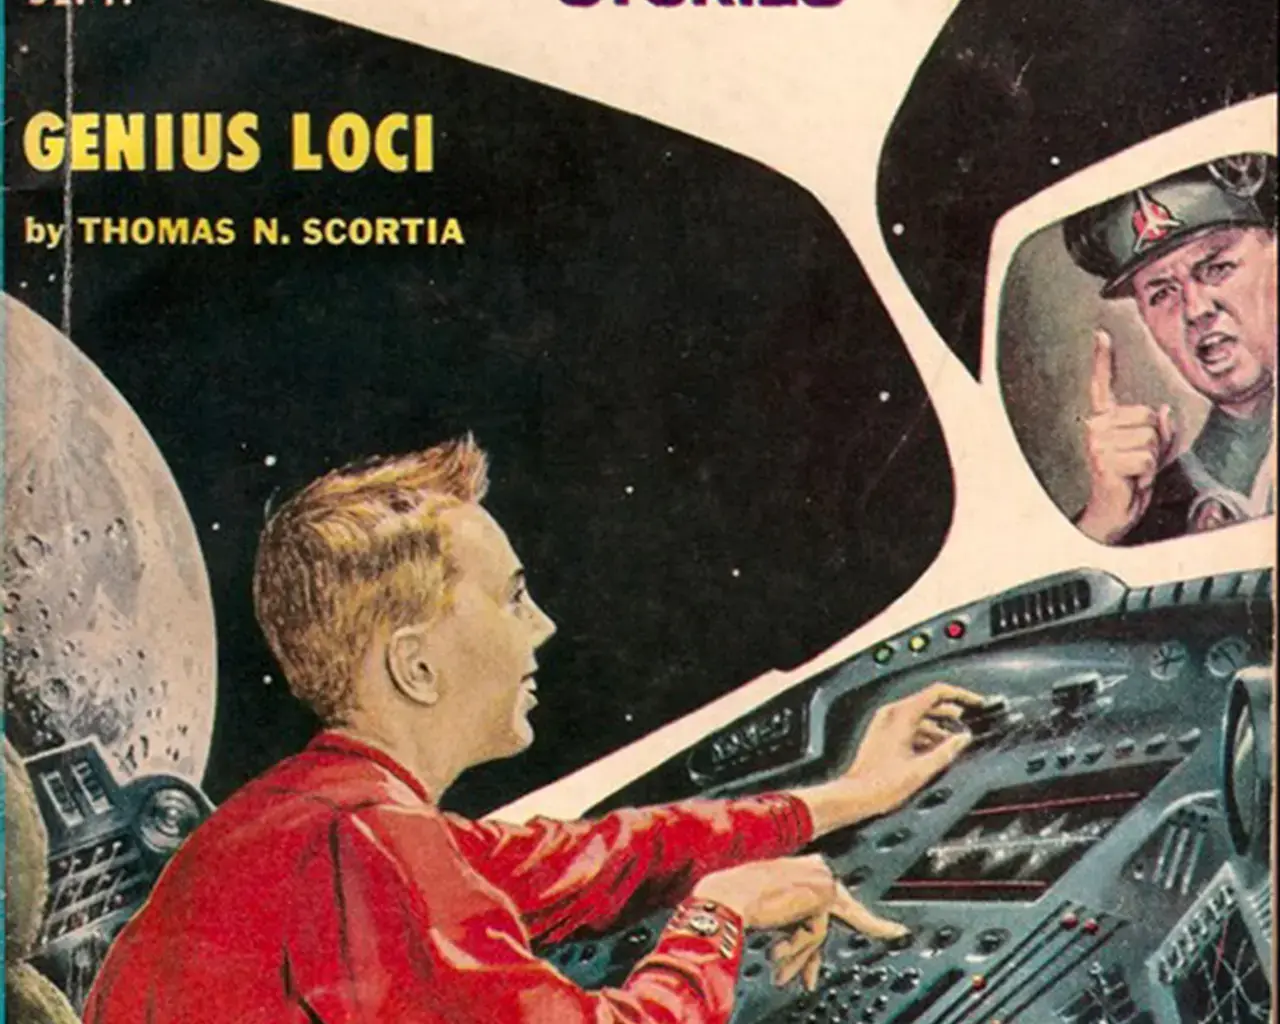 &nbsp;"The Original Science Fiction Stories," 1957, illustration by Ed Emshwiller. Image courtesy of Lightbox Film Center at International House Philadelphia.